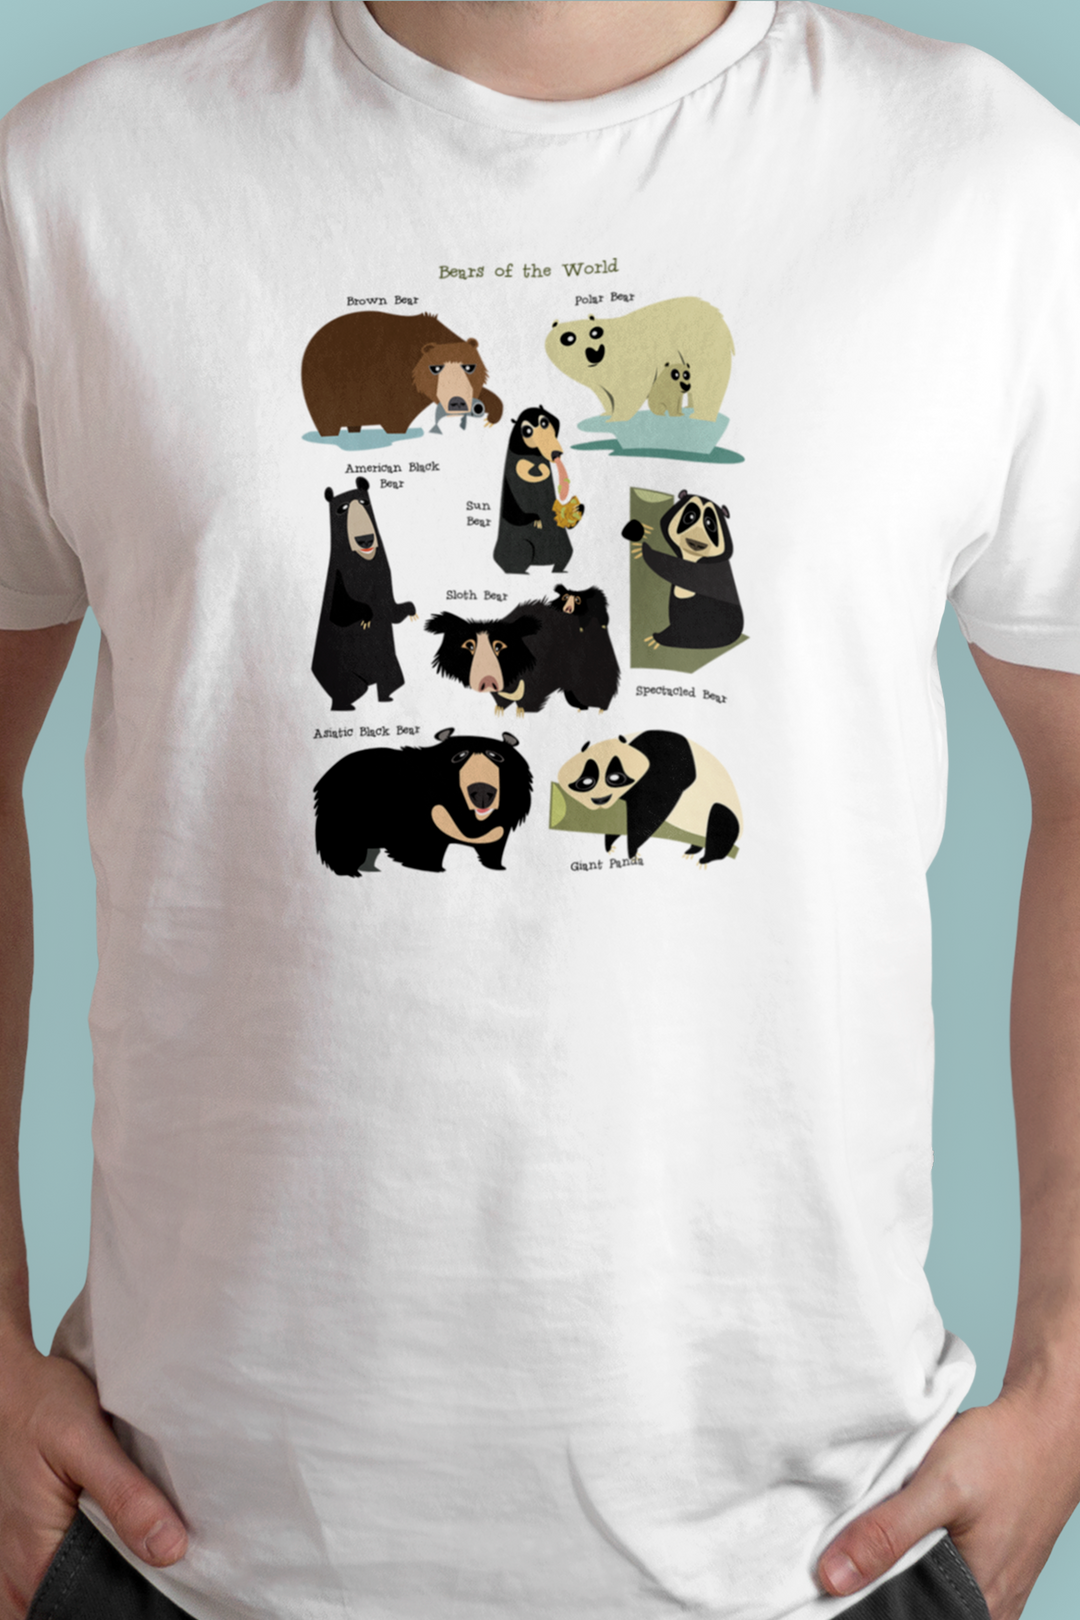 Bears of the World T-shirt